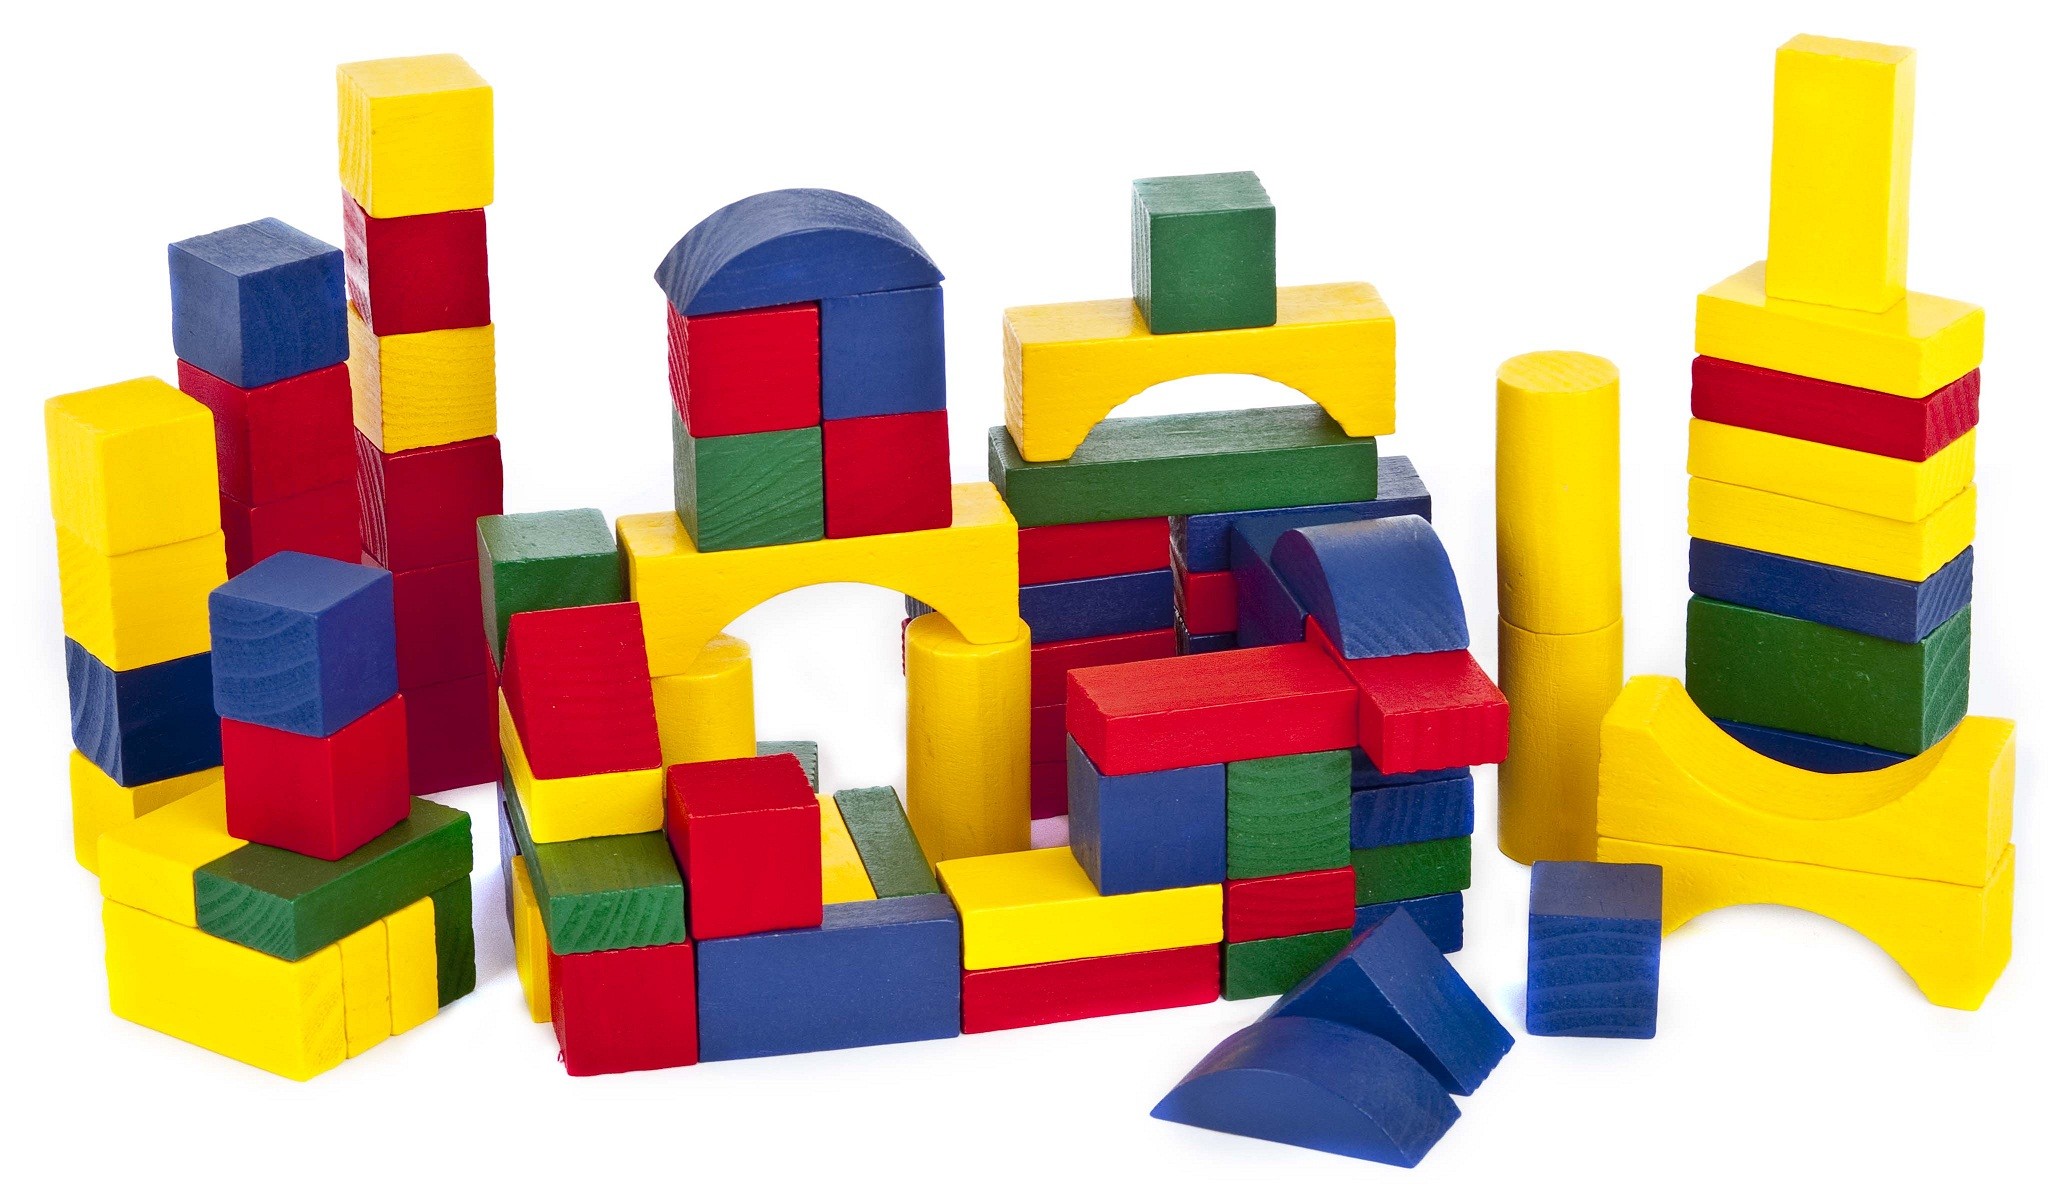 brick blocks toys